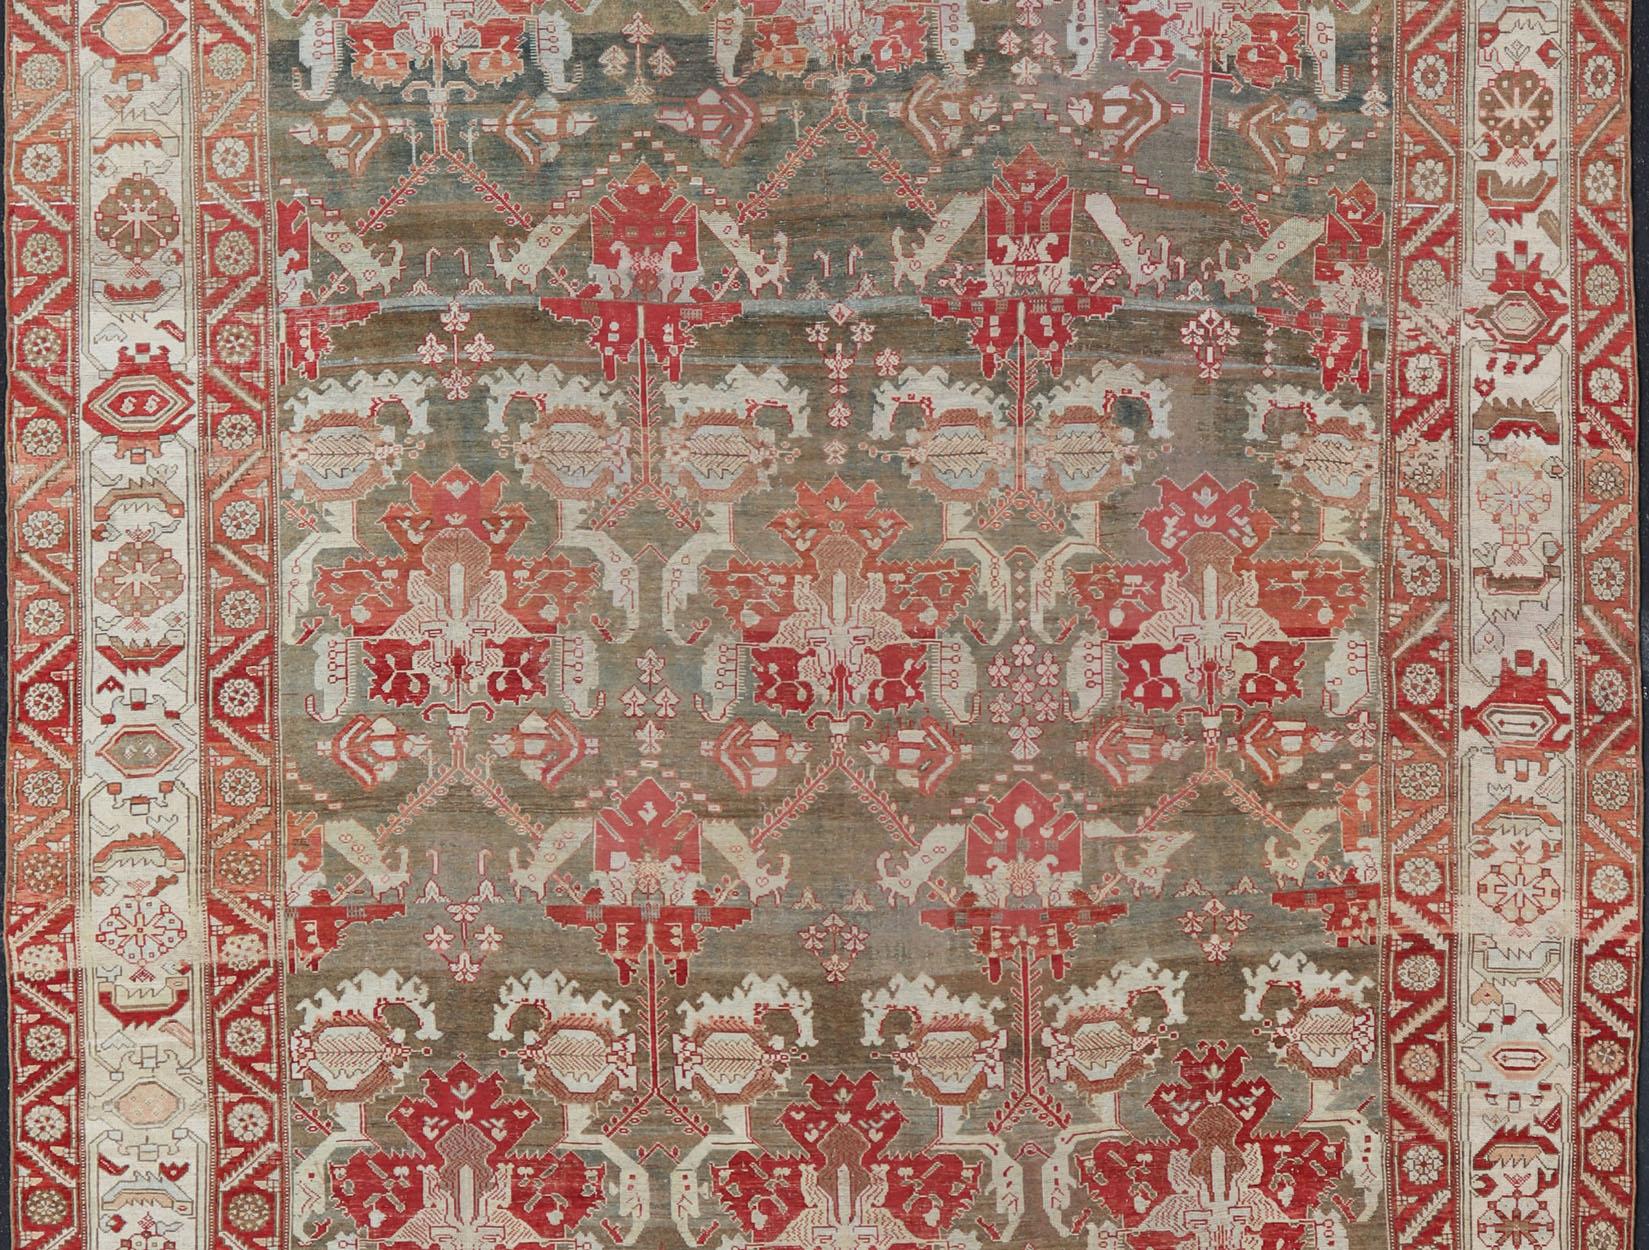 Antique Persian Large Scale Tribal Design Bakhtiari Rug in Multi Colors For Sale 2